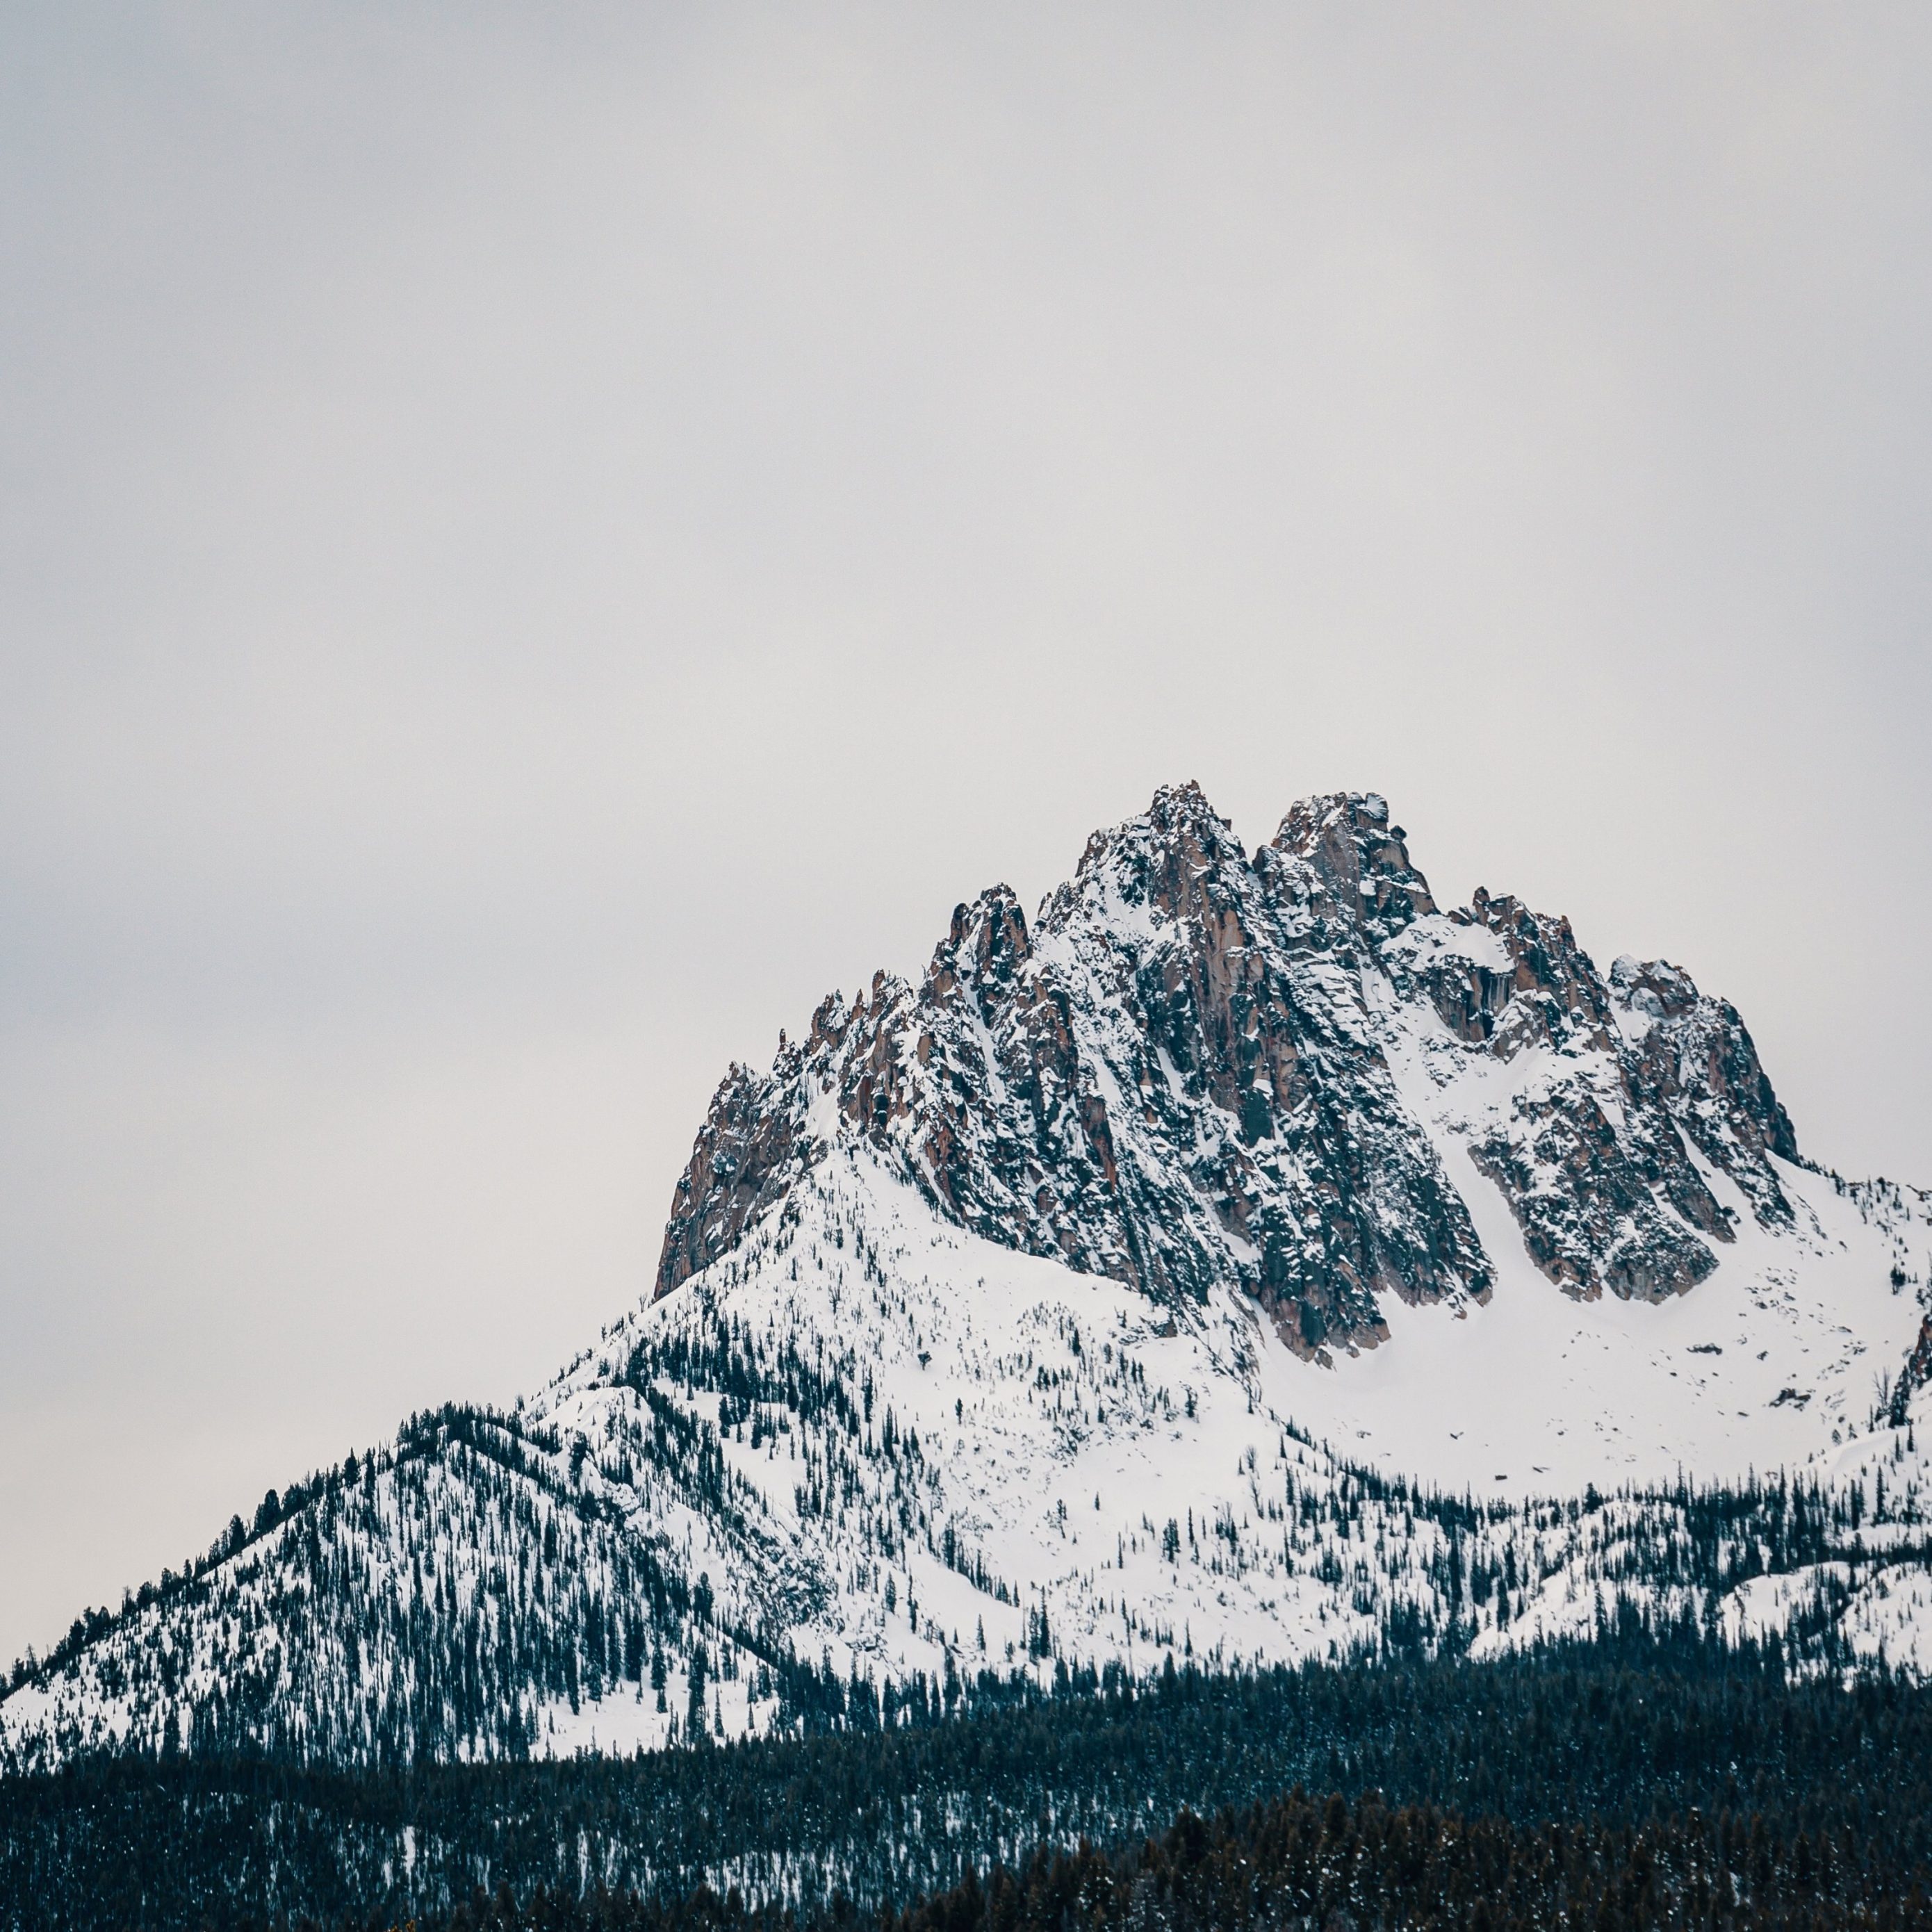 2780x2780 Parallax wallpaper 4k Winter Snow Mountain Peak Rocky iPad Wallpaper 2780x2780 pixels resolution